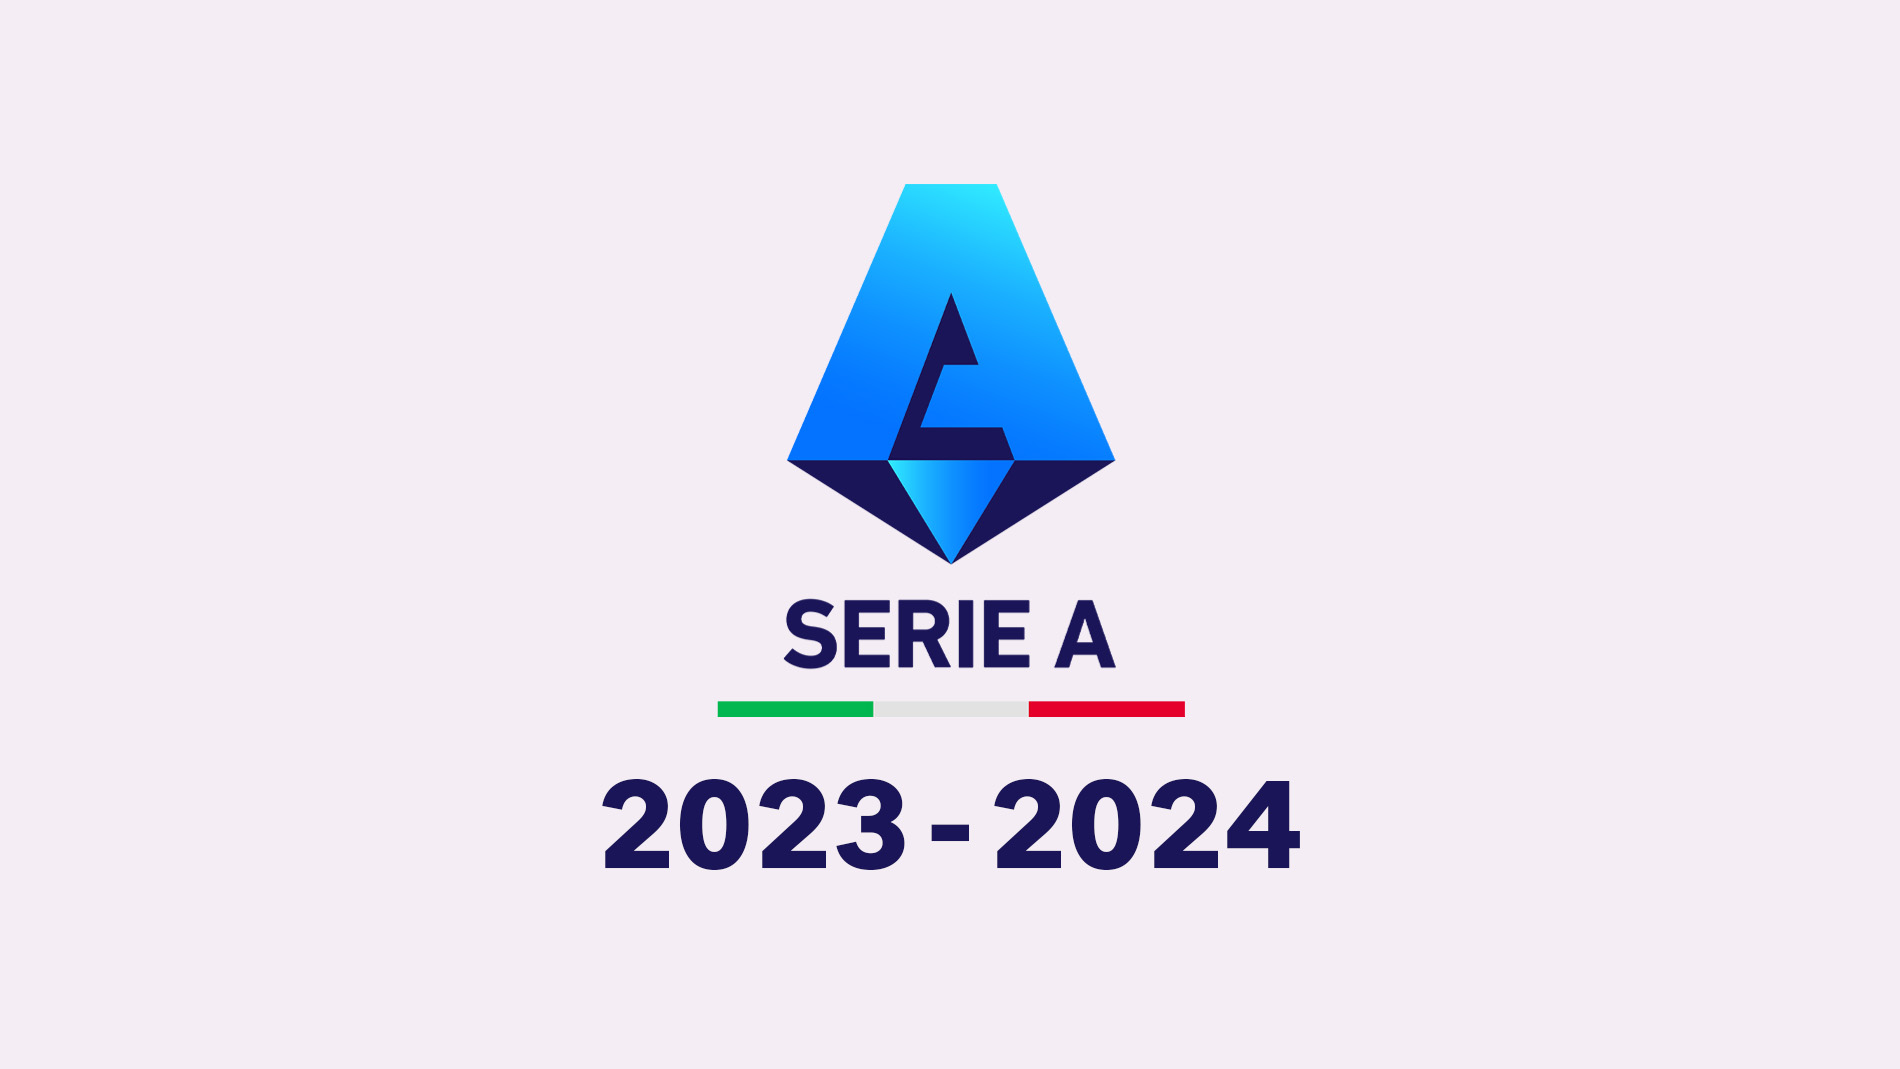 Serie A Season 2023-2024 - A complete guide.